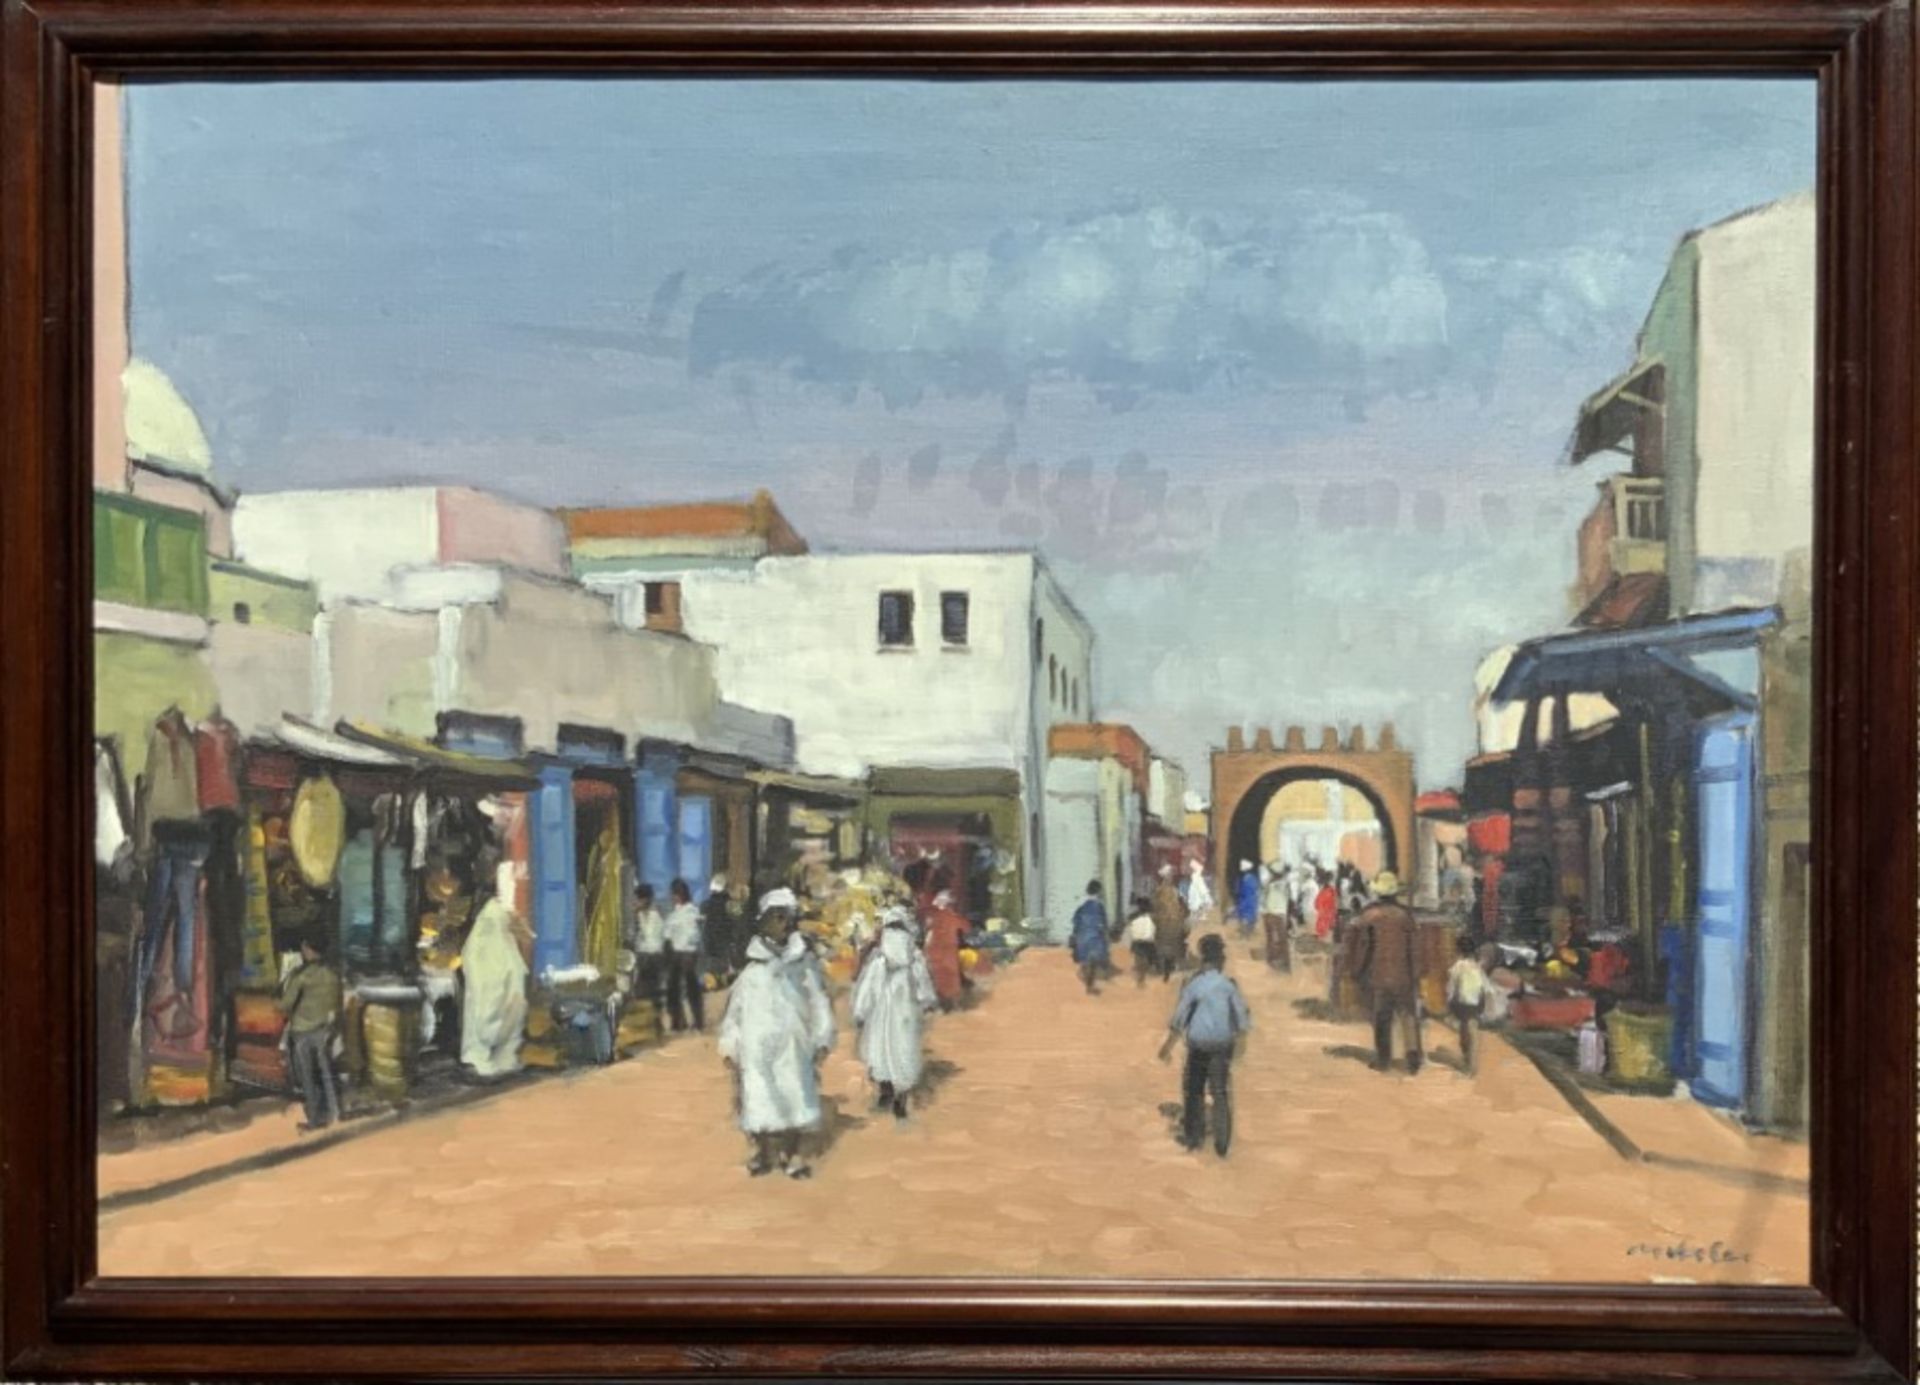 Market street in Monastir Tunisia - Image 2 of 3